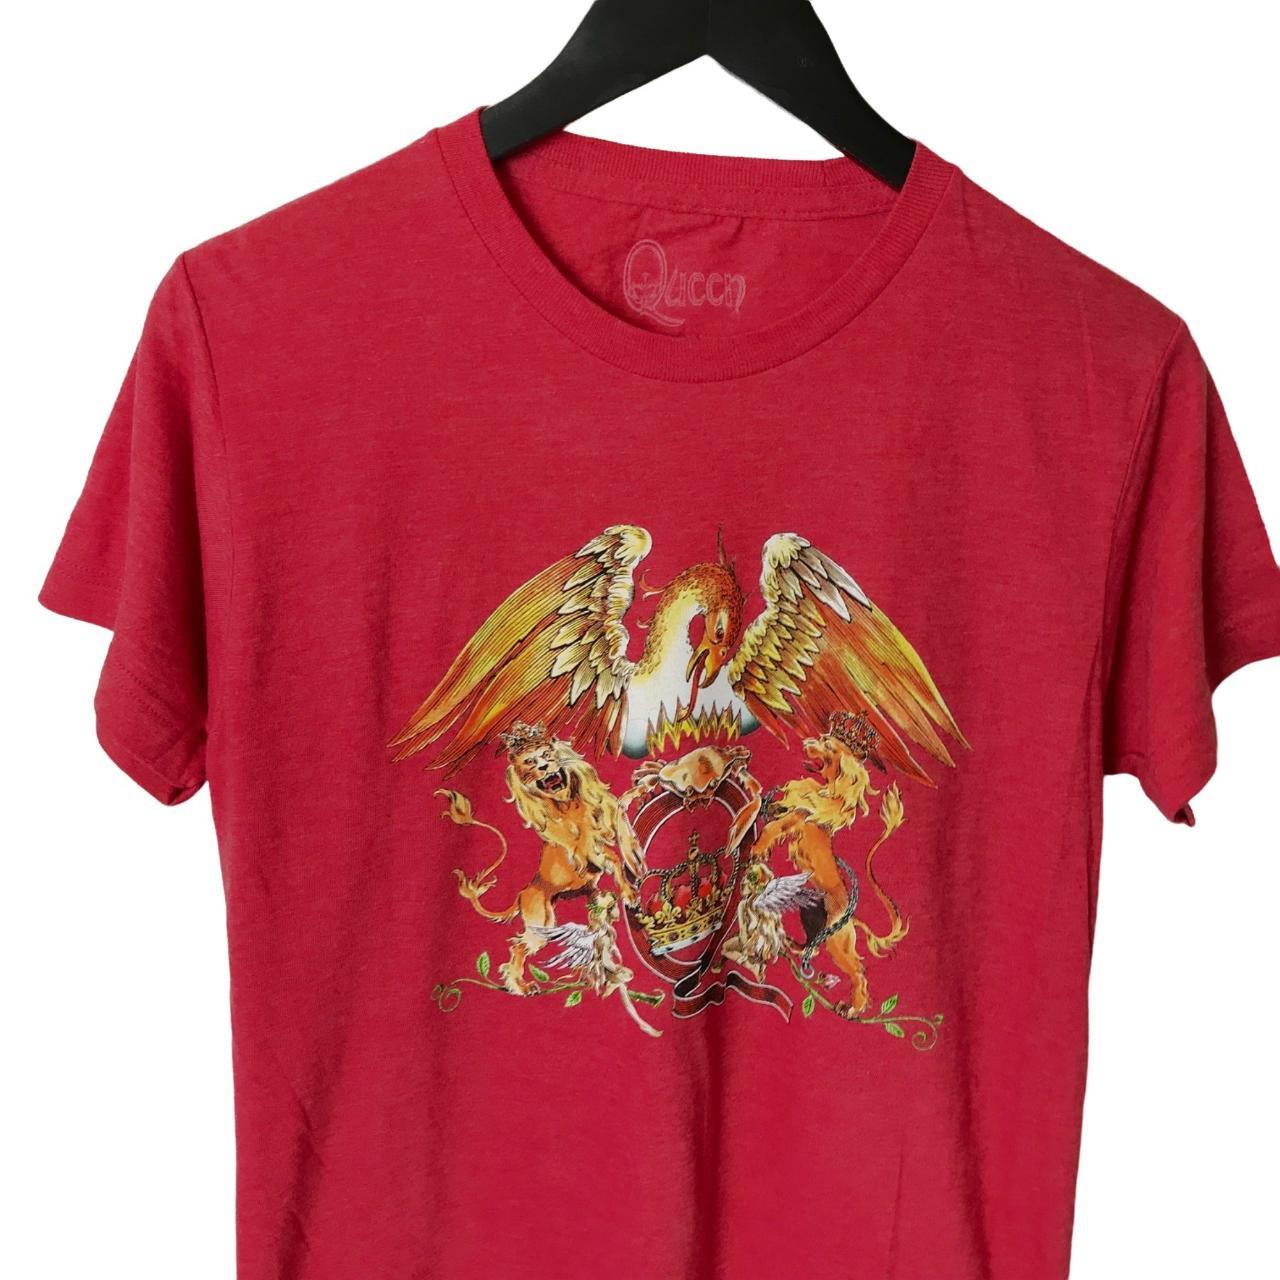 PacSun Men's Red T-shirt (2)